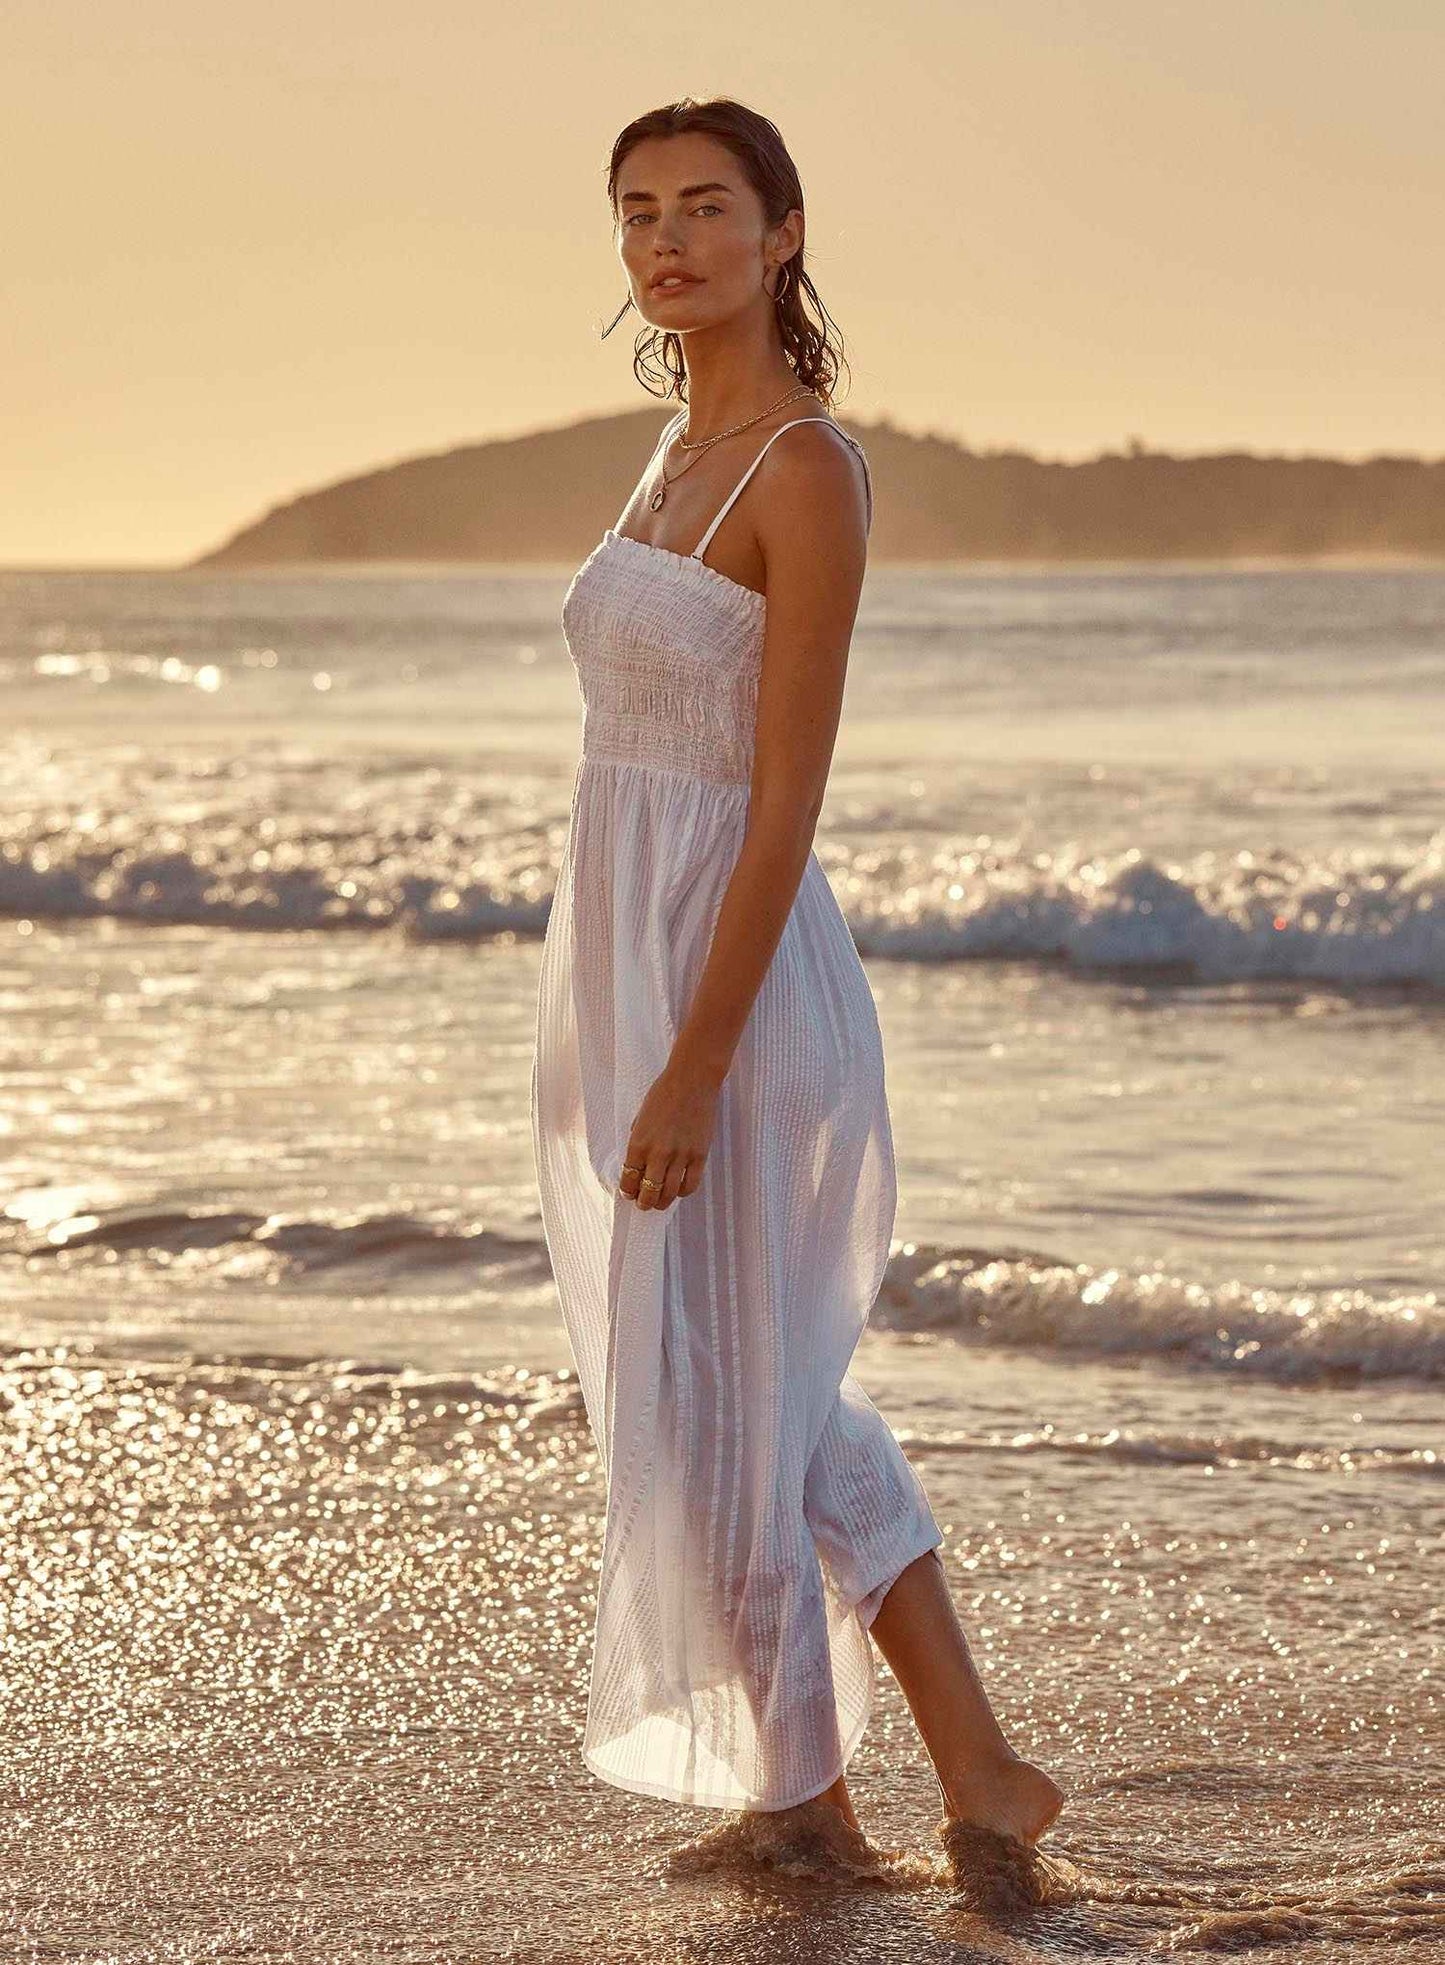 Sea Level: Heatwave Bandeau Dress White